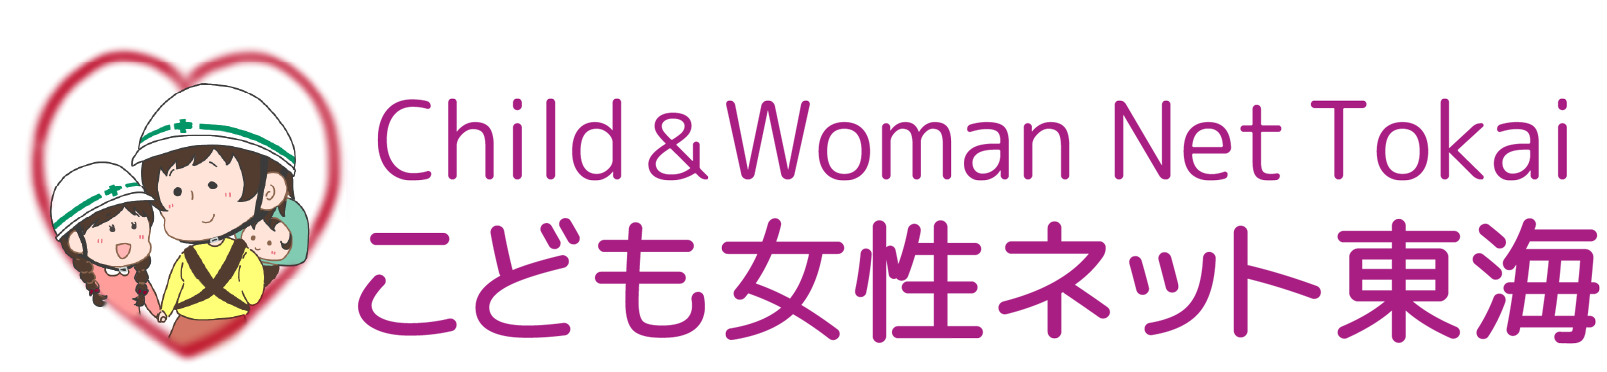 Child&Woman_Net_Tokai